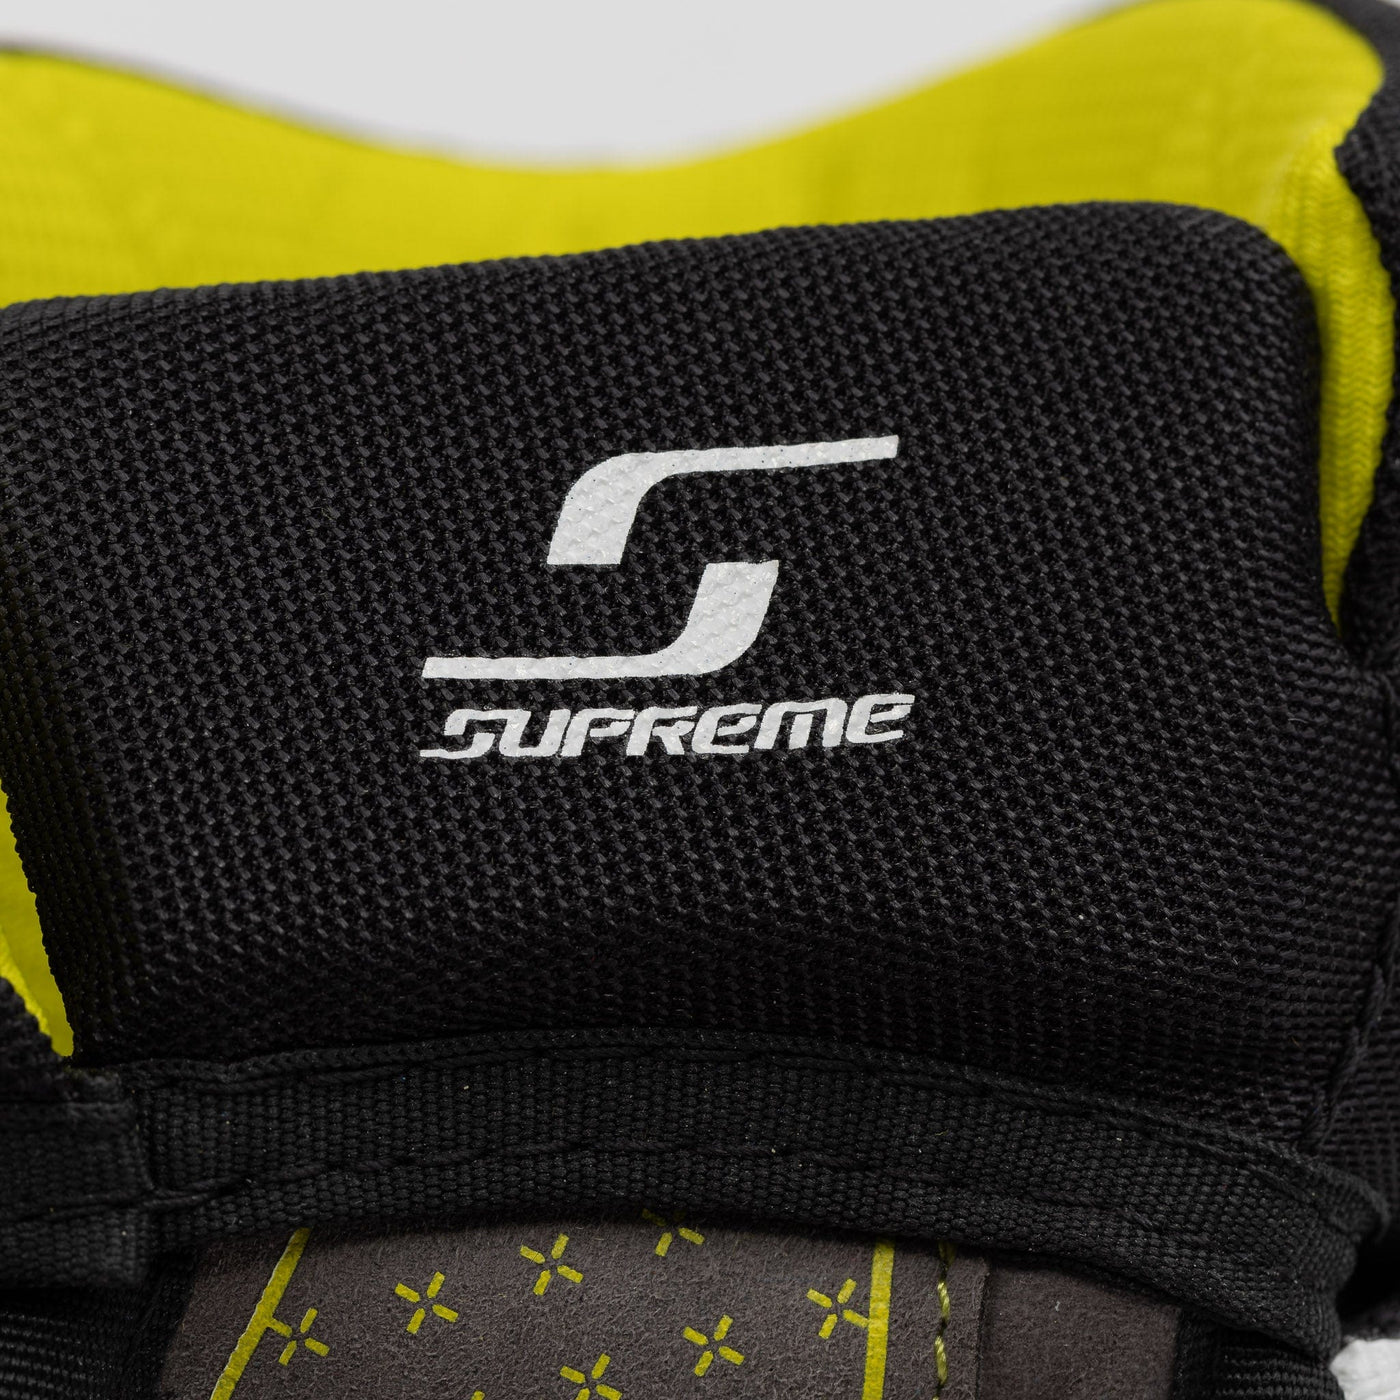 Bauer Supreme M3 Junior Hockey Gloves - The Hockey Shop Source For Sports